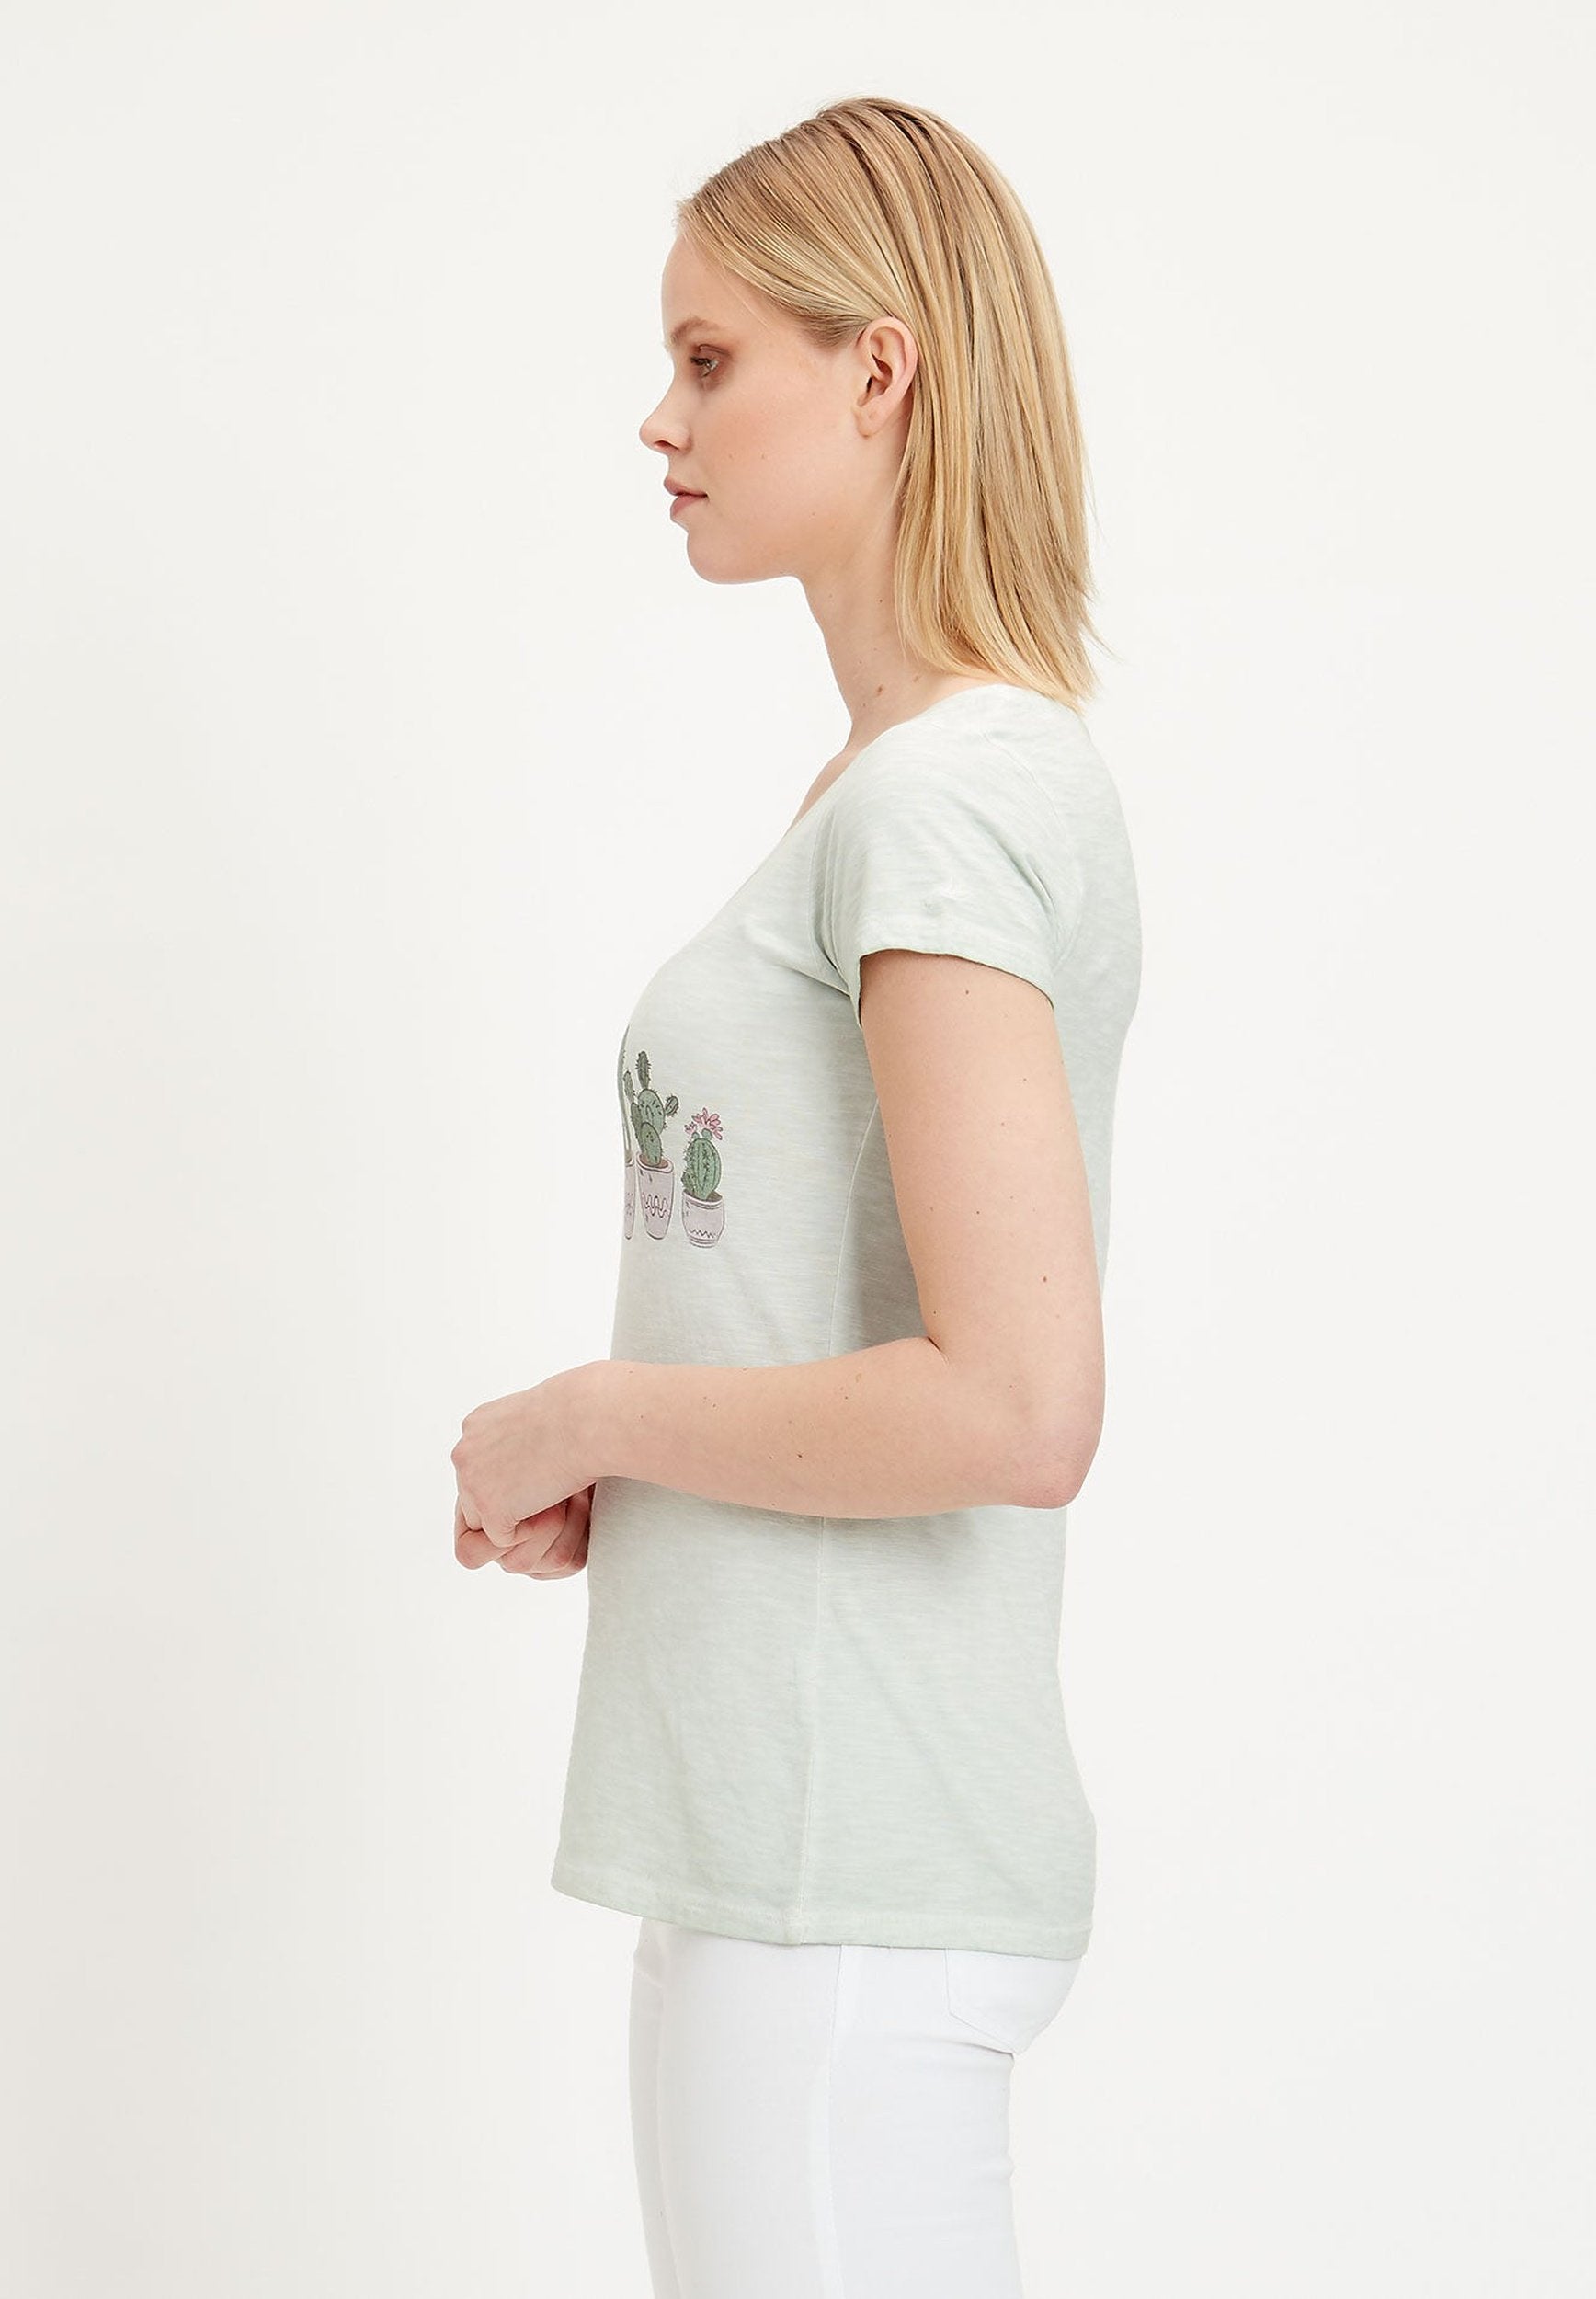 Garment Dyed T-Shirt aus Bio-Baumwolle mit Kaktus-Print